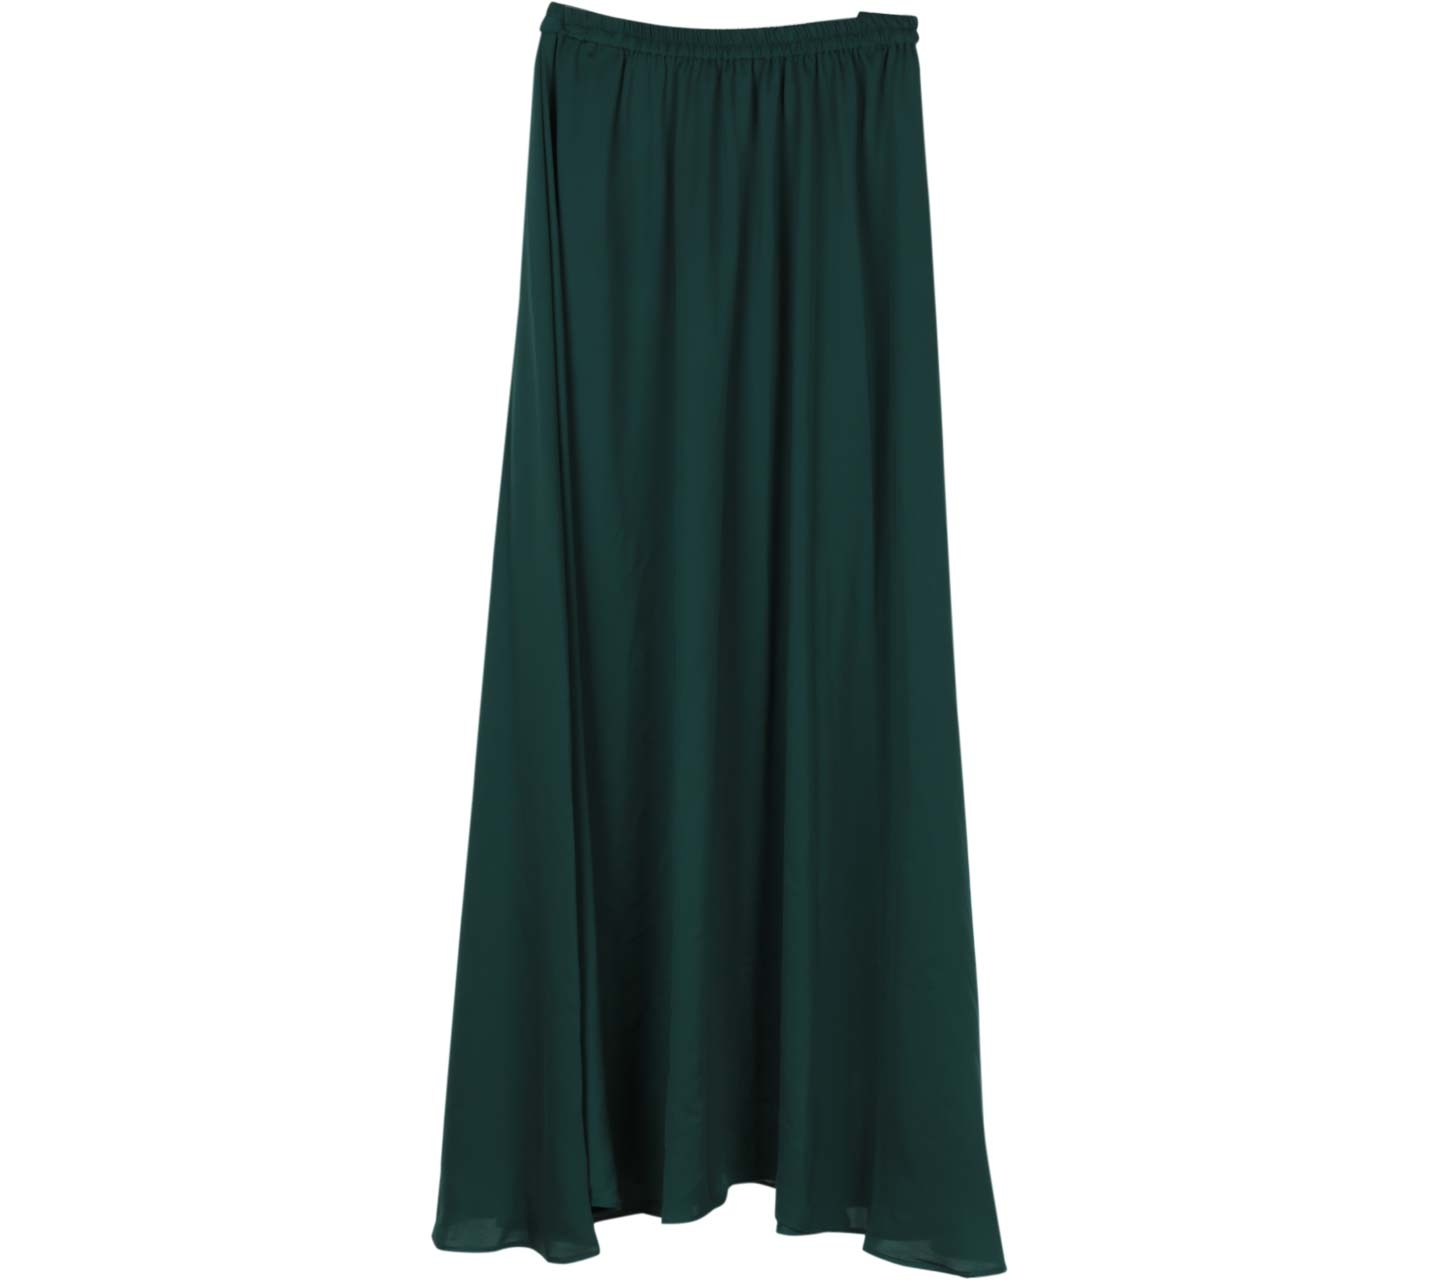 Novierock Dark Green Skirt